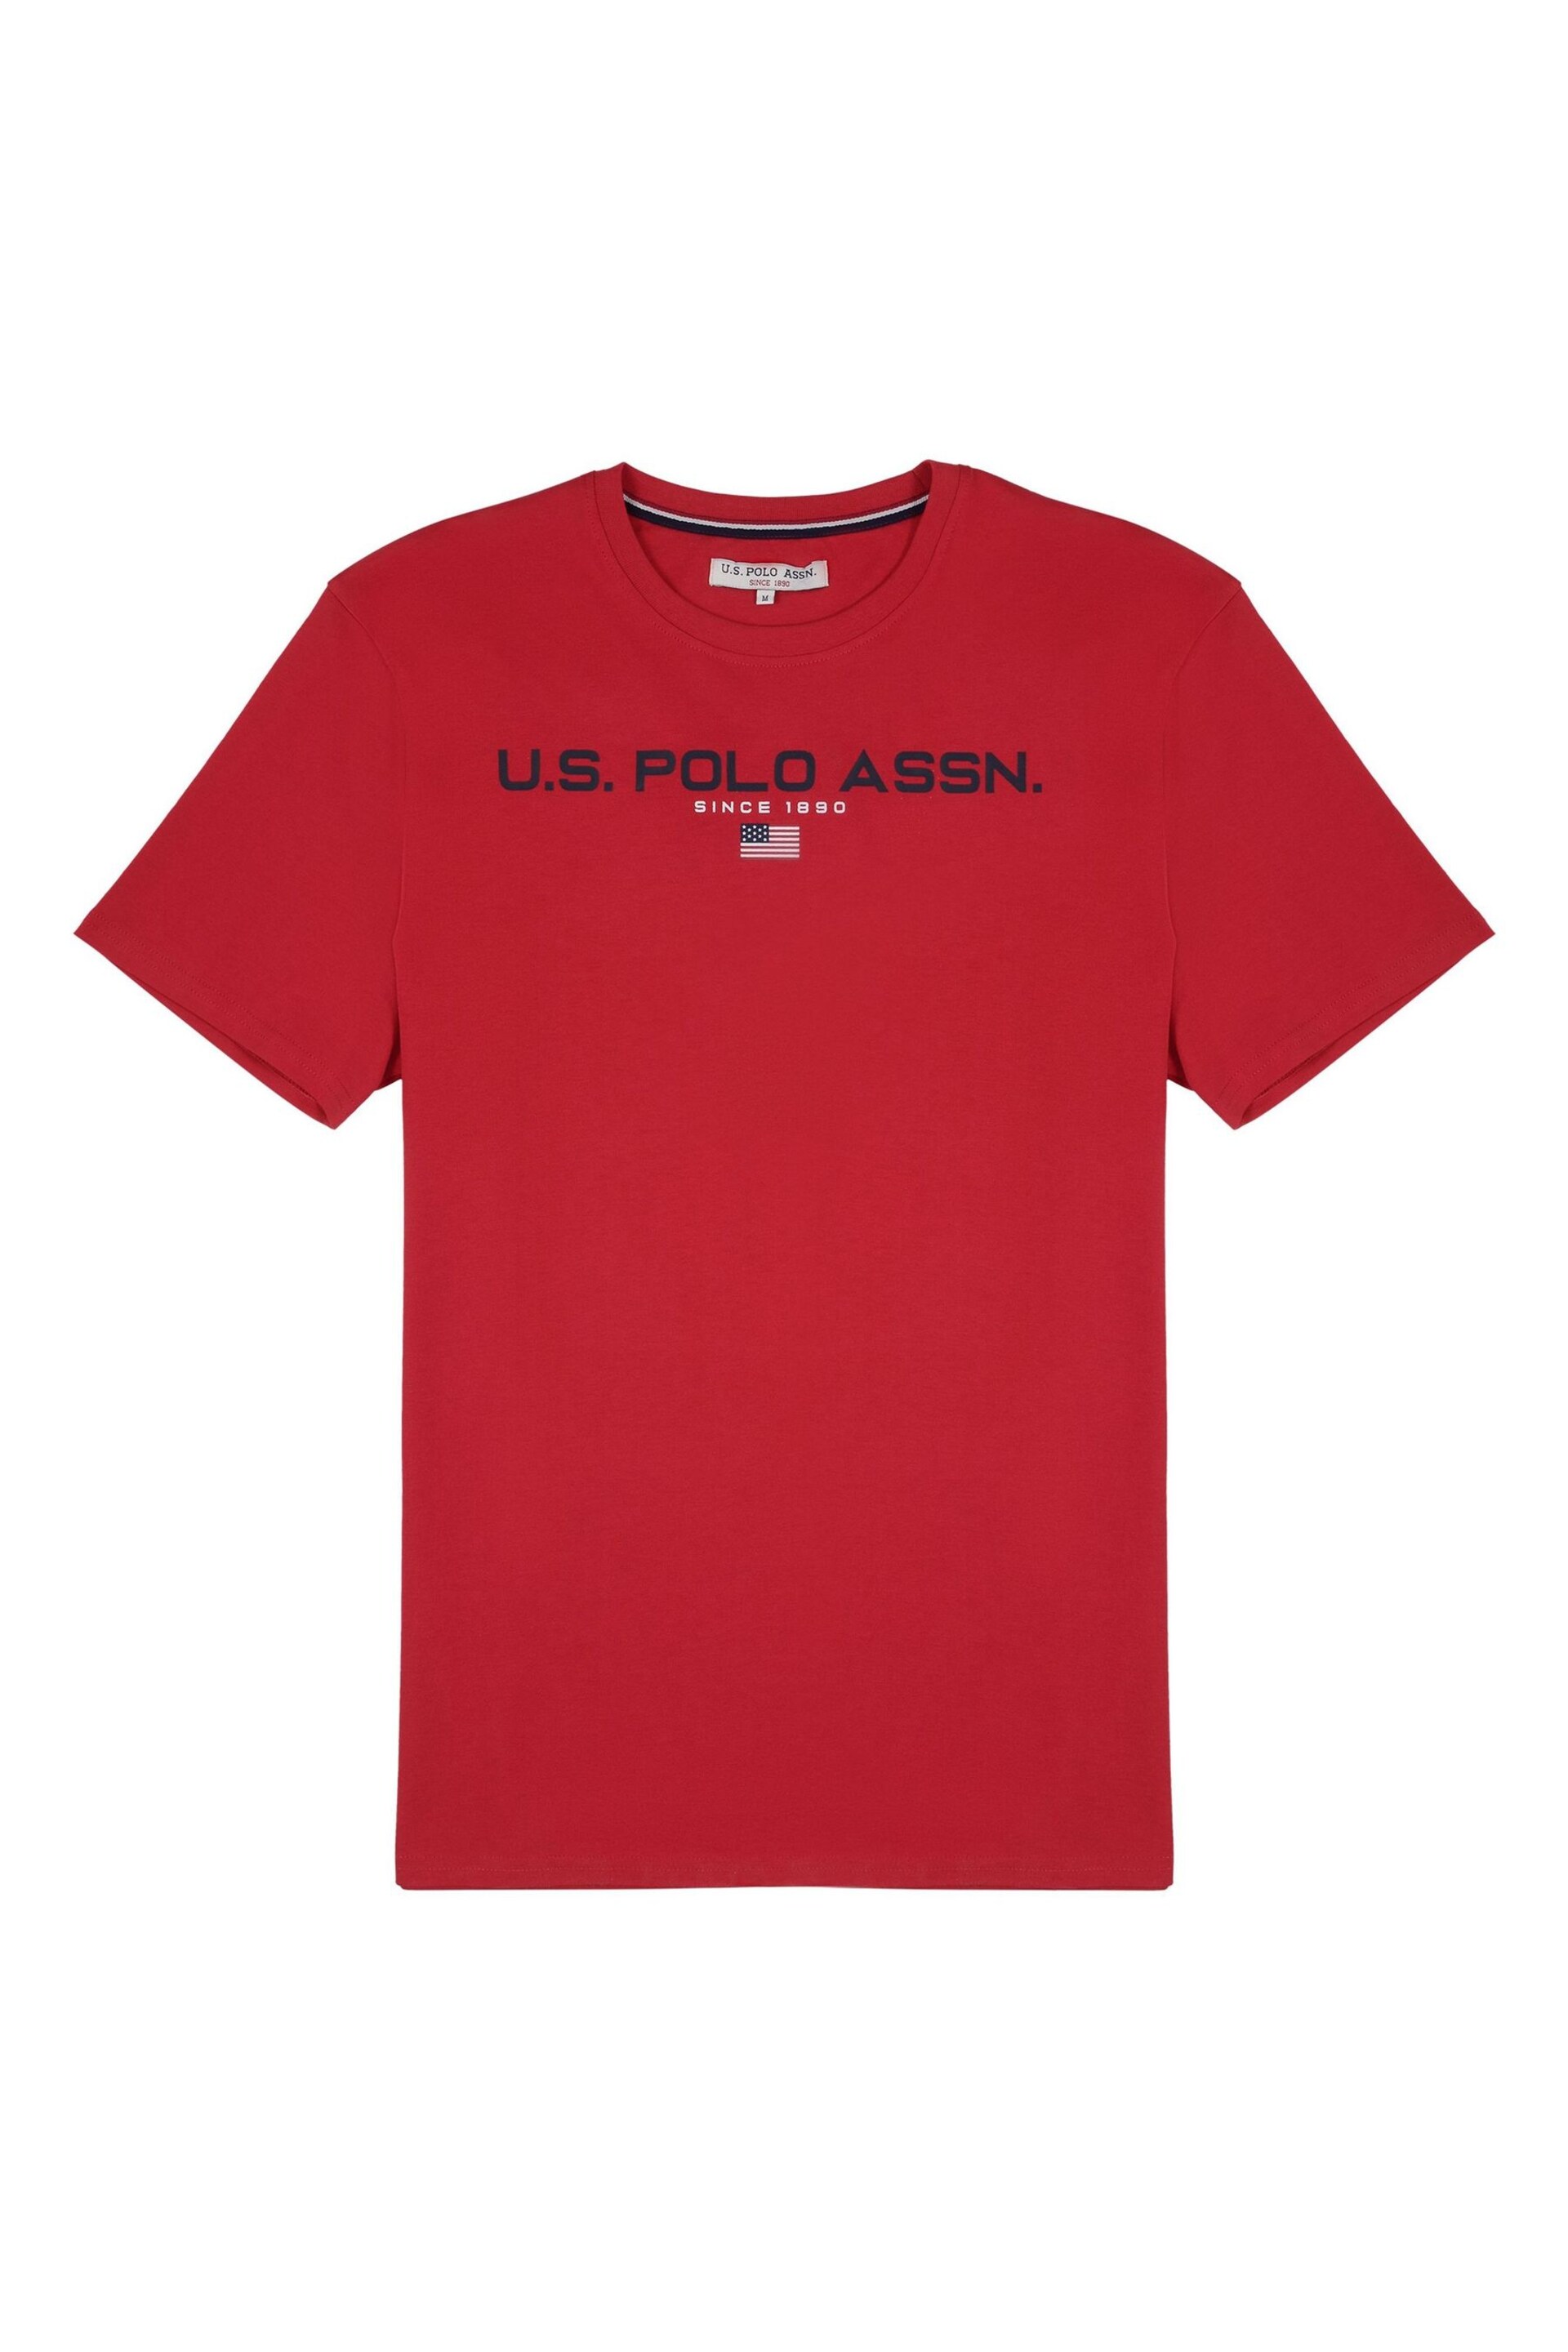 U.S. Polo Assn. Tango Red Sport T-Shirt - Image 4 of 6